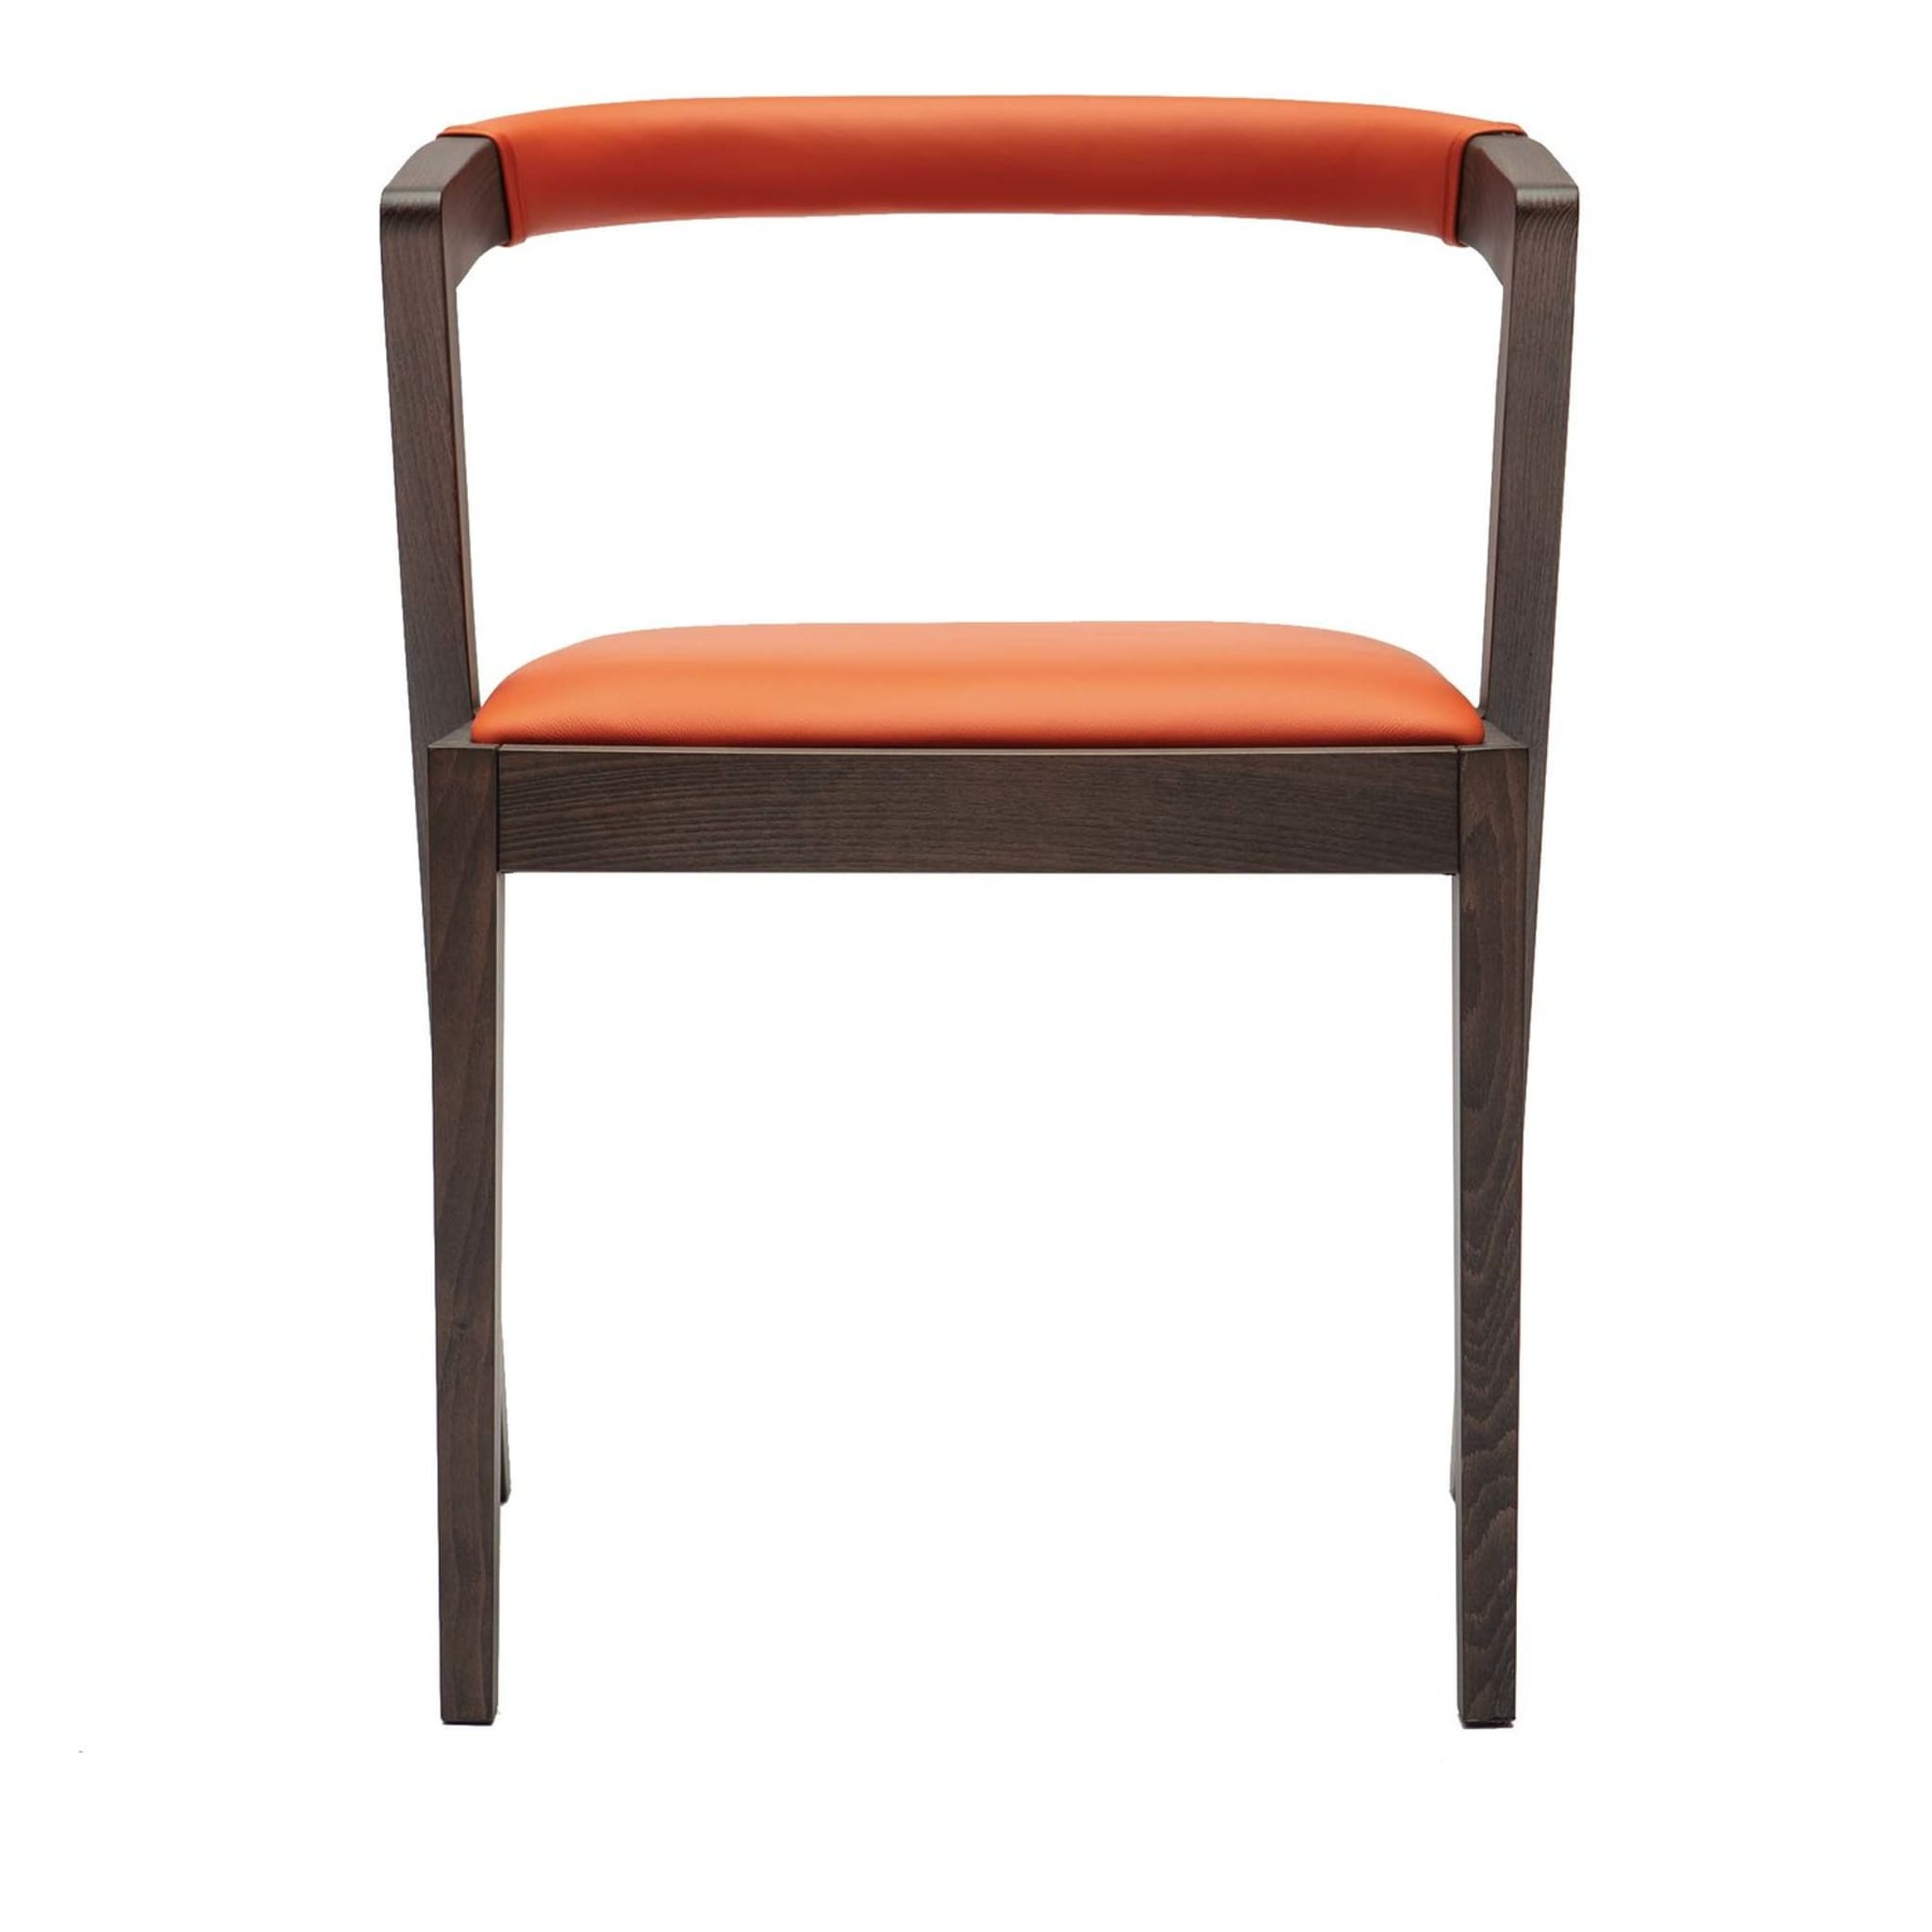 String orange chair - Main view